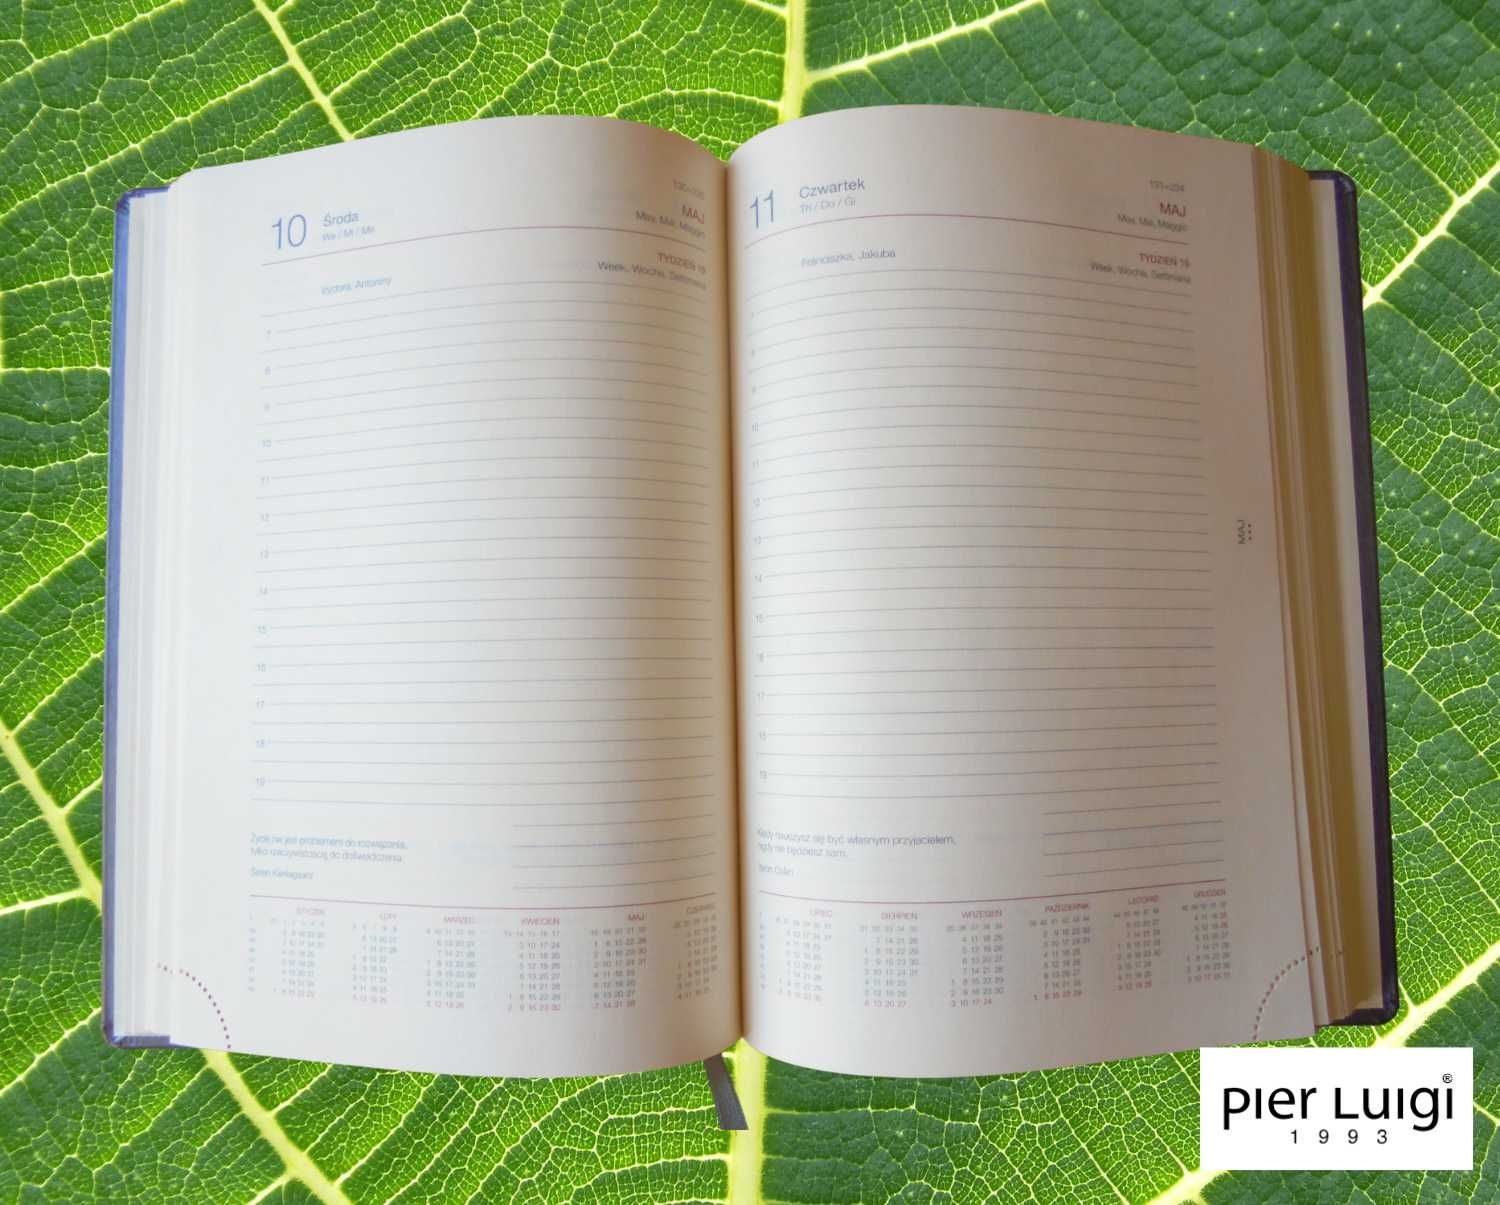 Pier Luigi kalendarz książkowy Aluminium na 2023 rok (format A5)